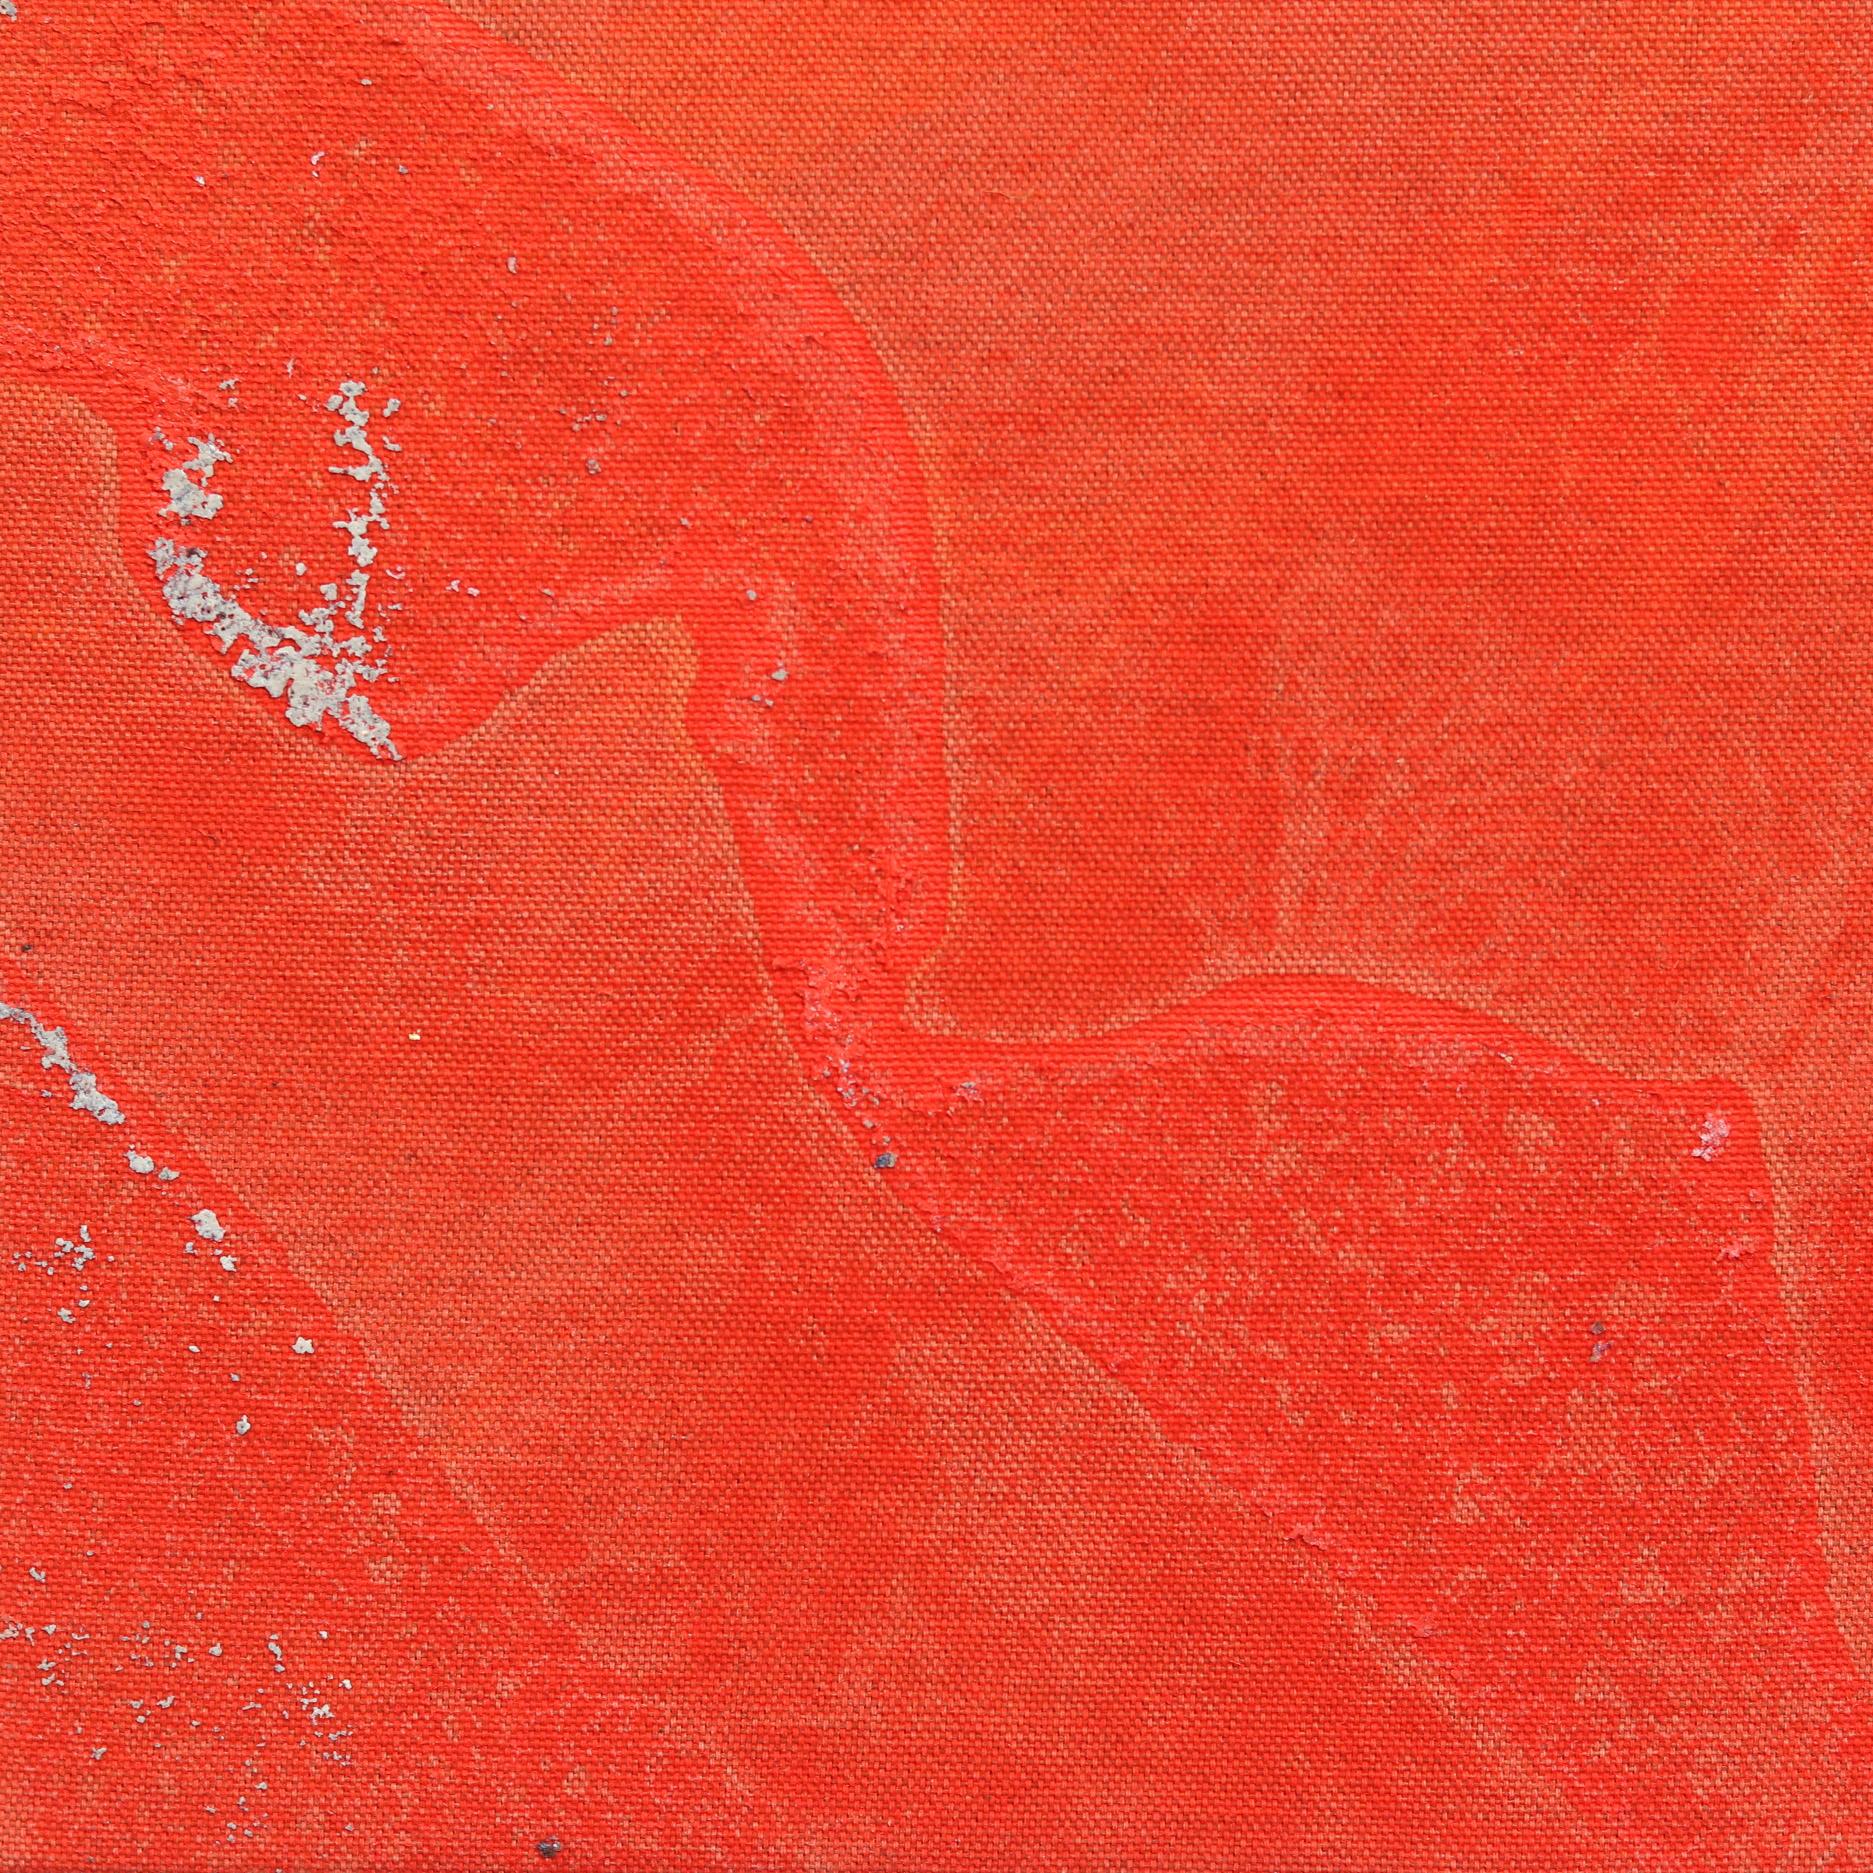 Concrete Sunset Mini I - Bold Meditative Gold Leaf Painting on Linen Canvas For Sale 3